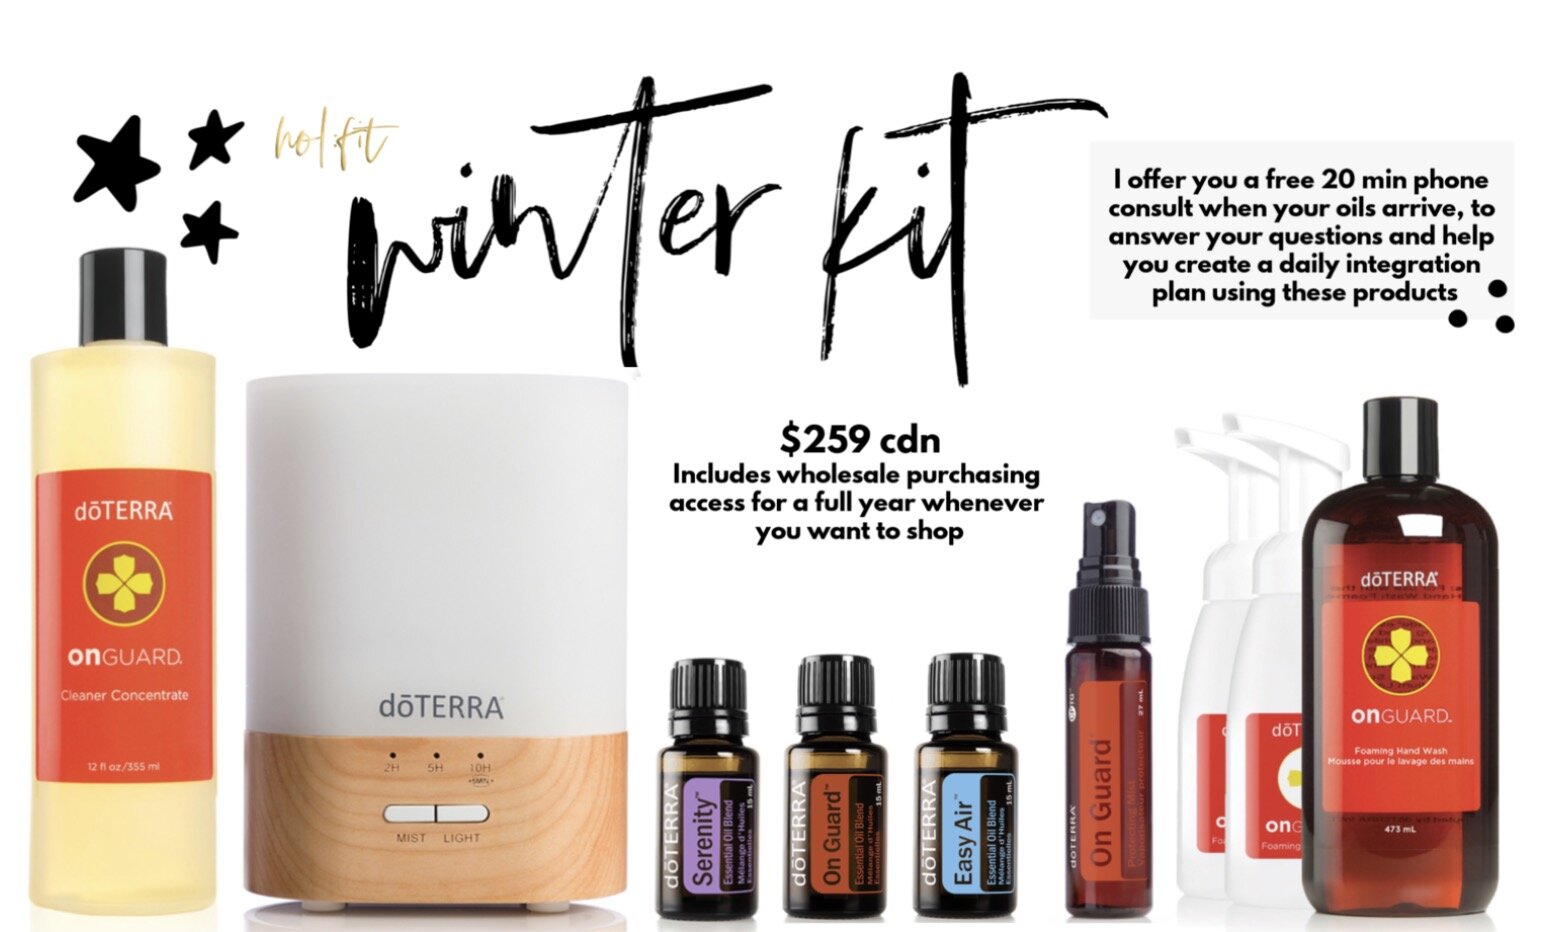 The Winter Kit